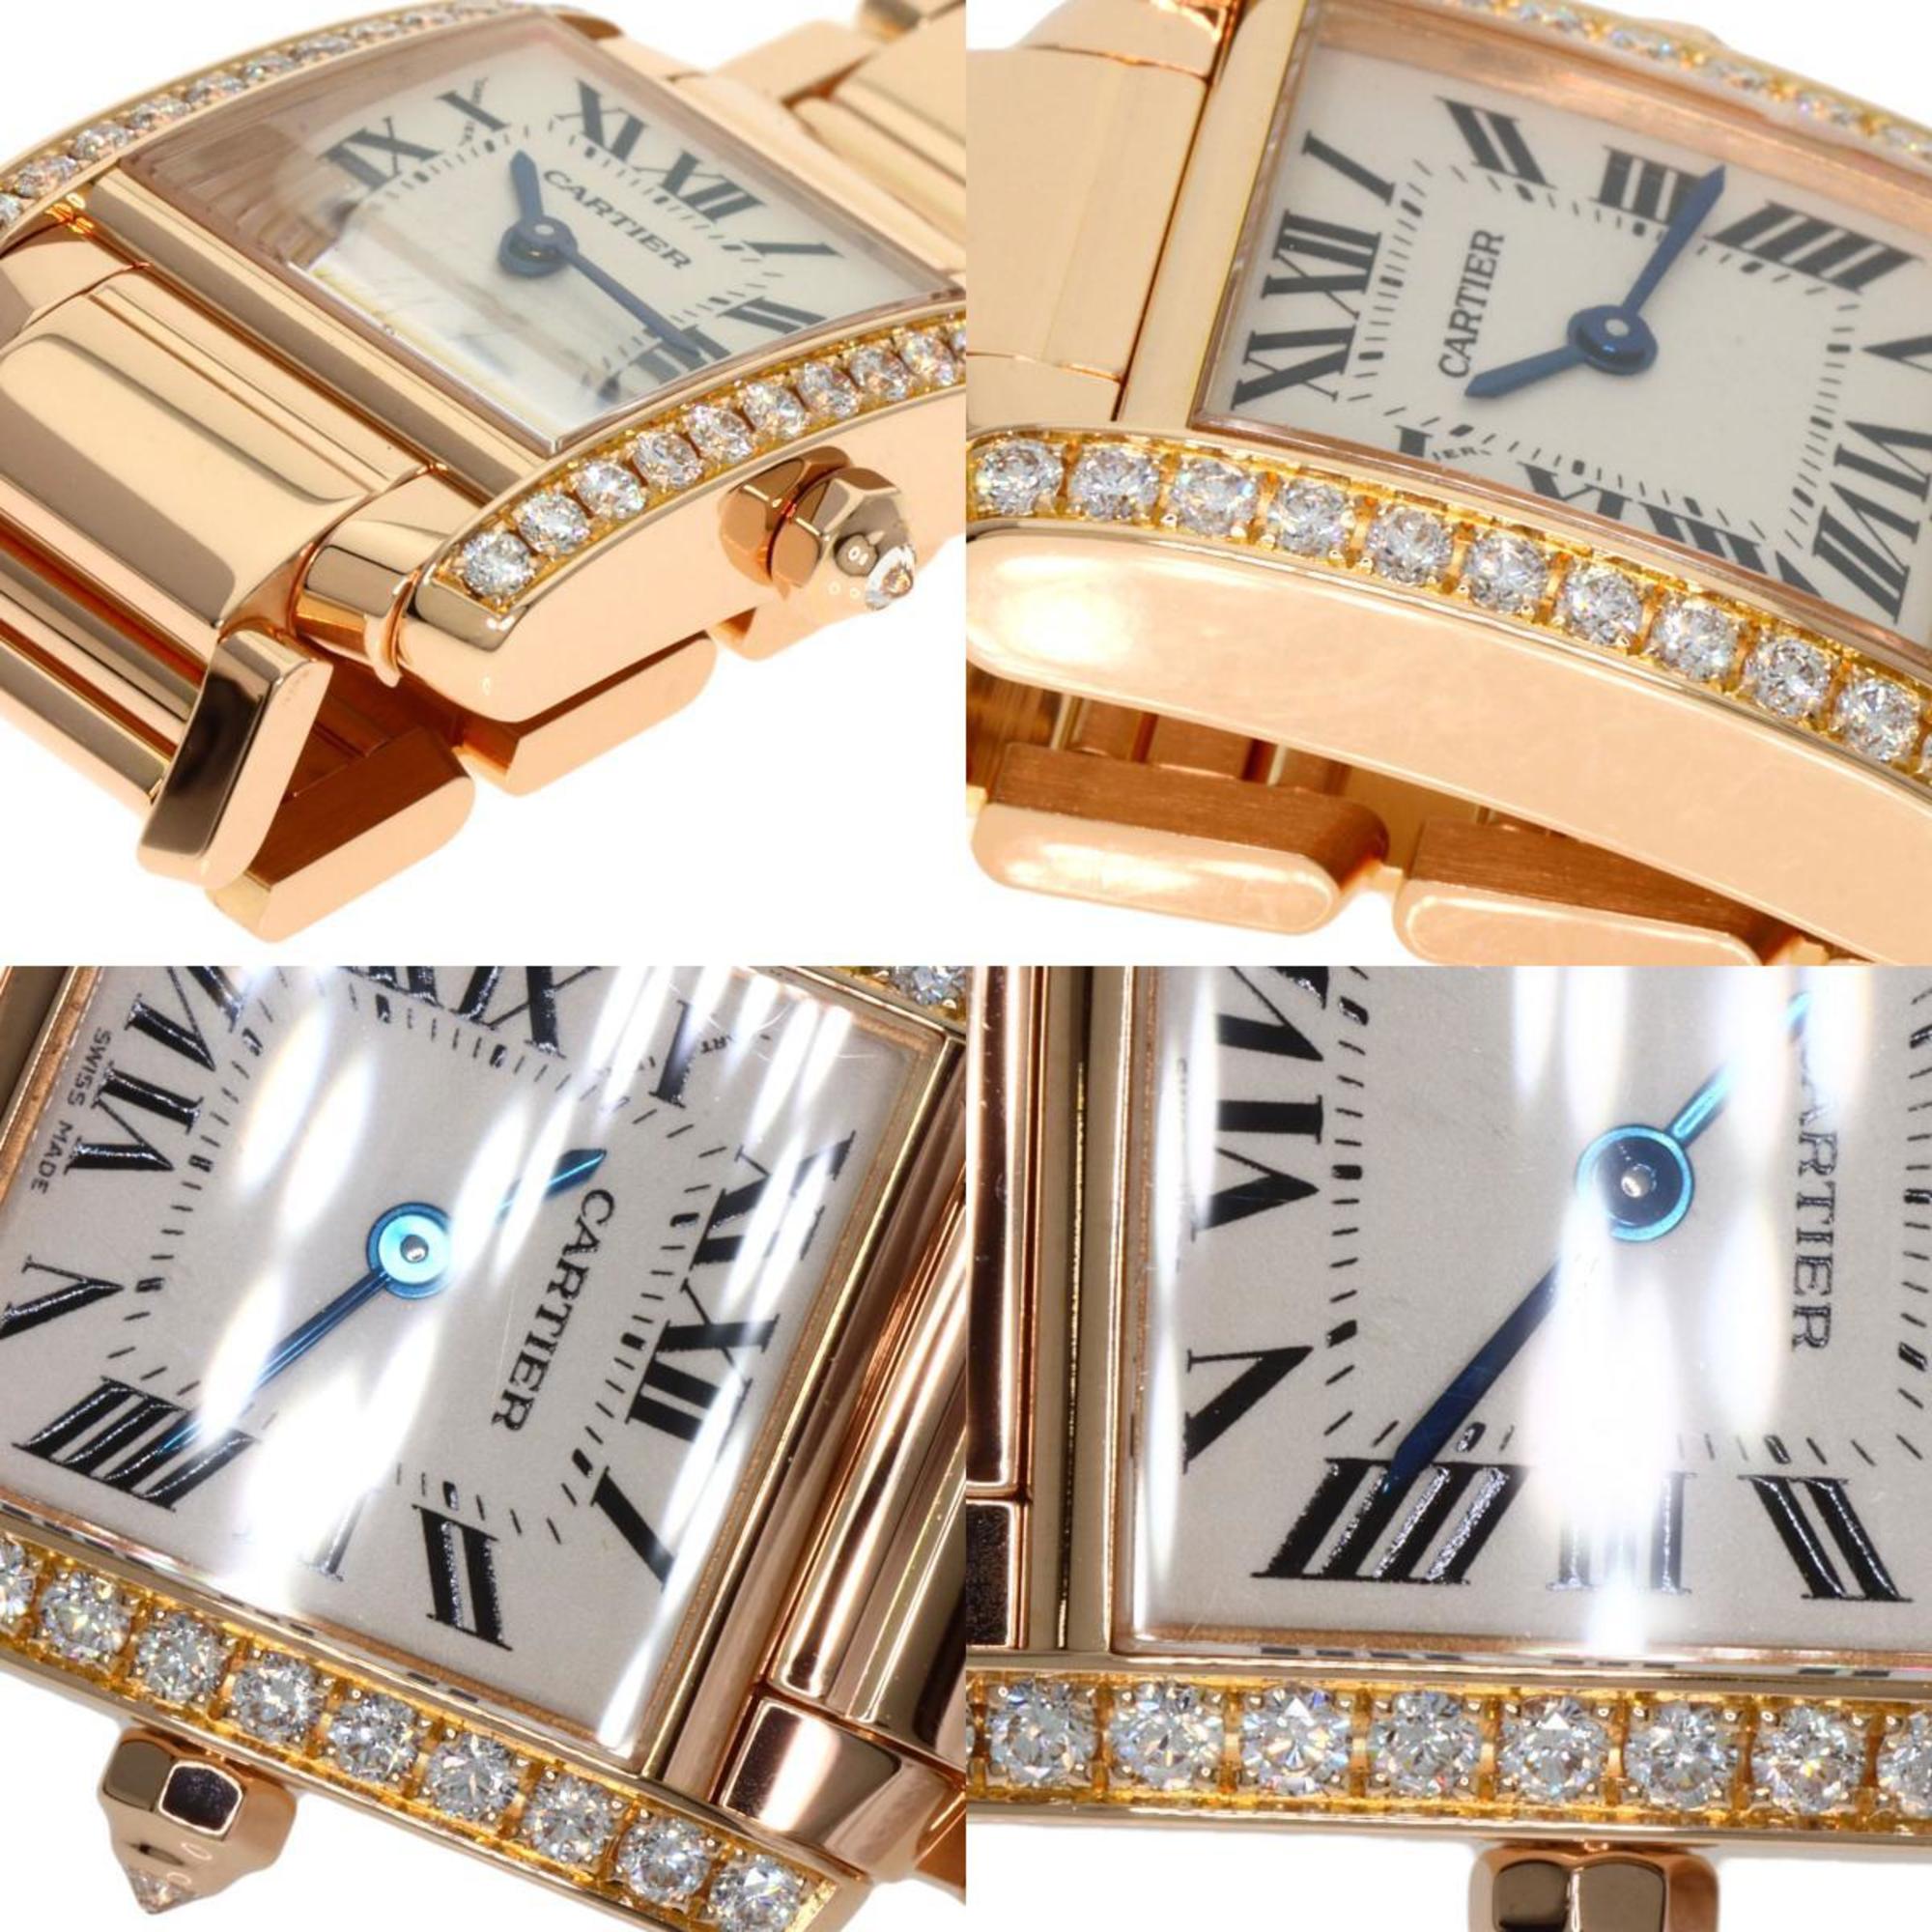 Cartier WE1001R8 Tank Francaise SM Diamond Watch K18 Pink Gold K18PG Ladies